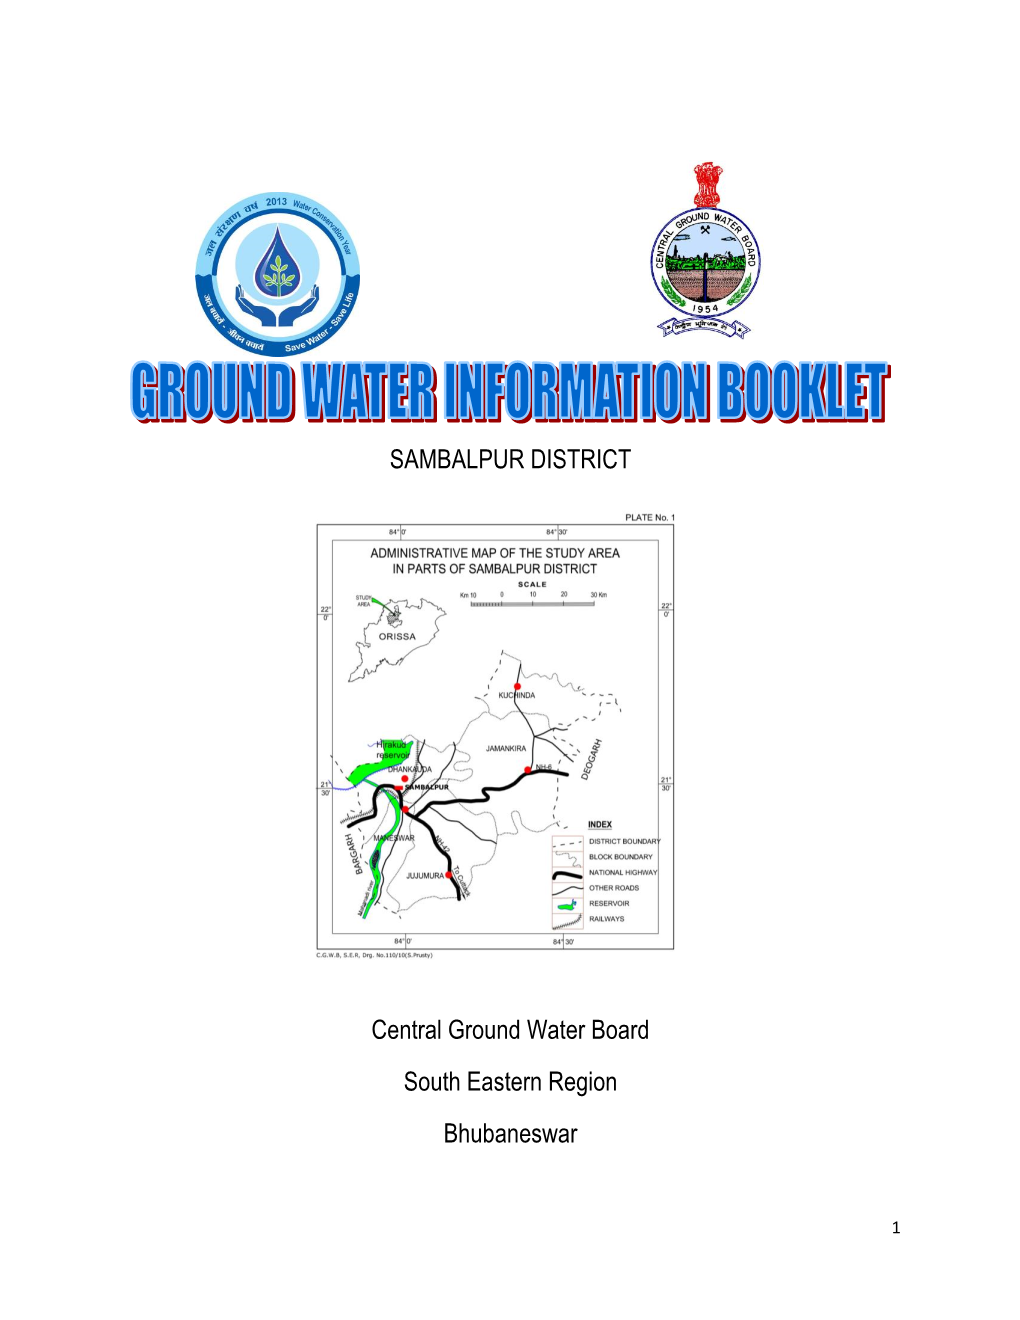 Ground Water Brochure of Sambalpur District, Orissa